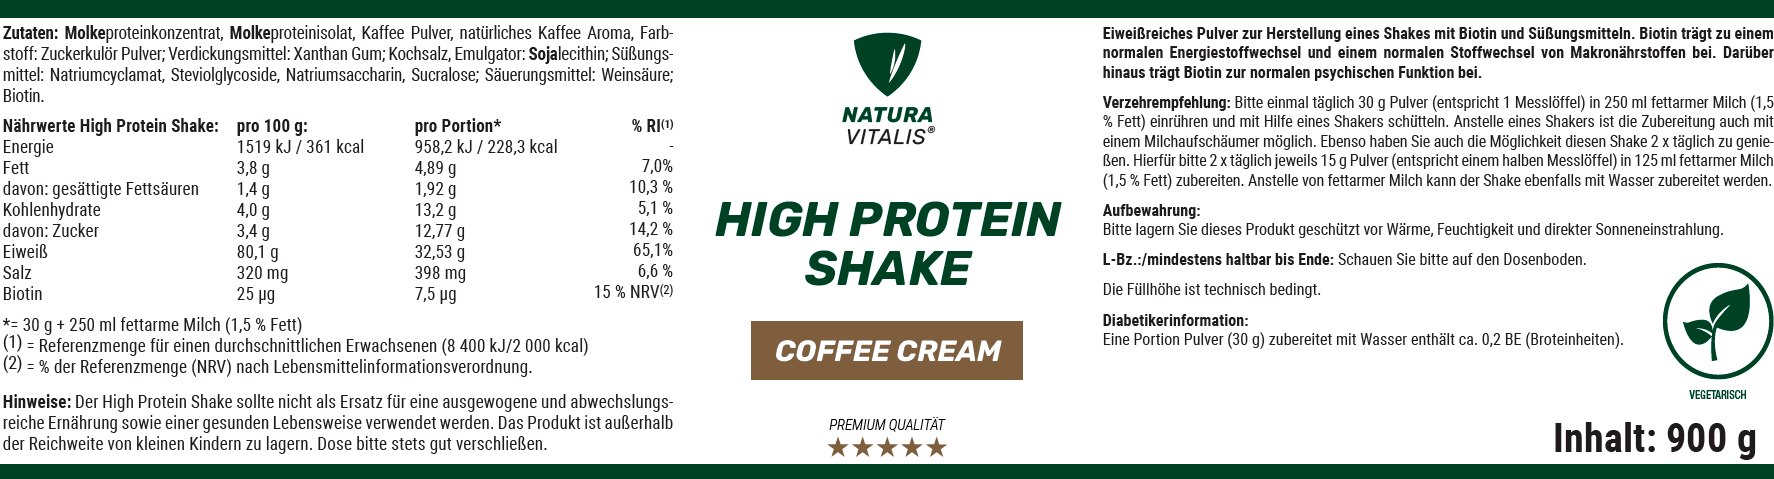 High Protein Shake von Natura Vitalis